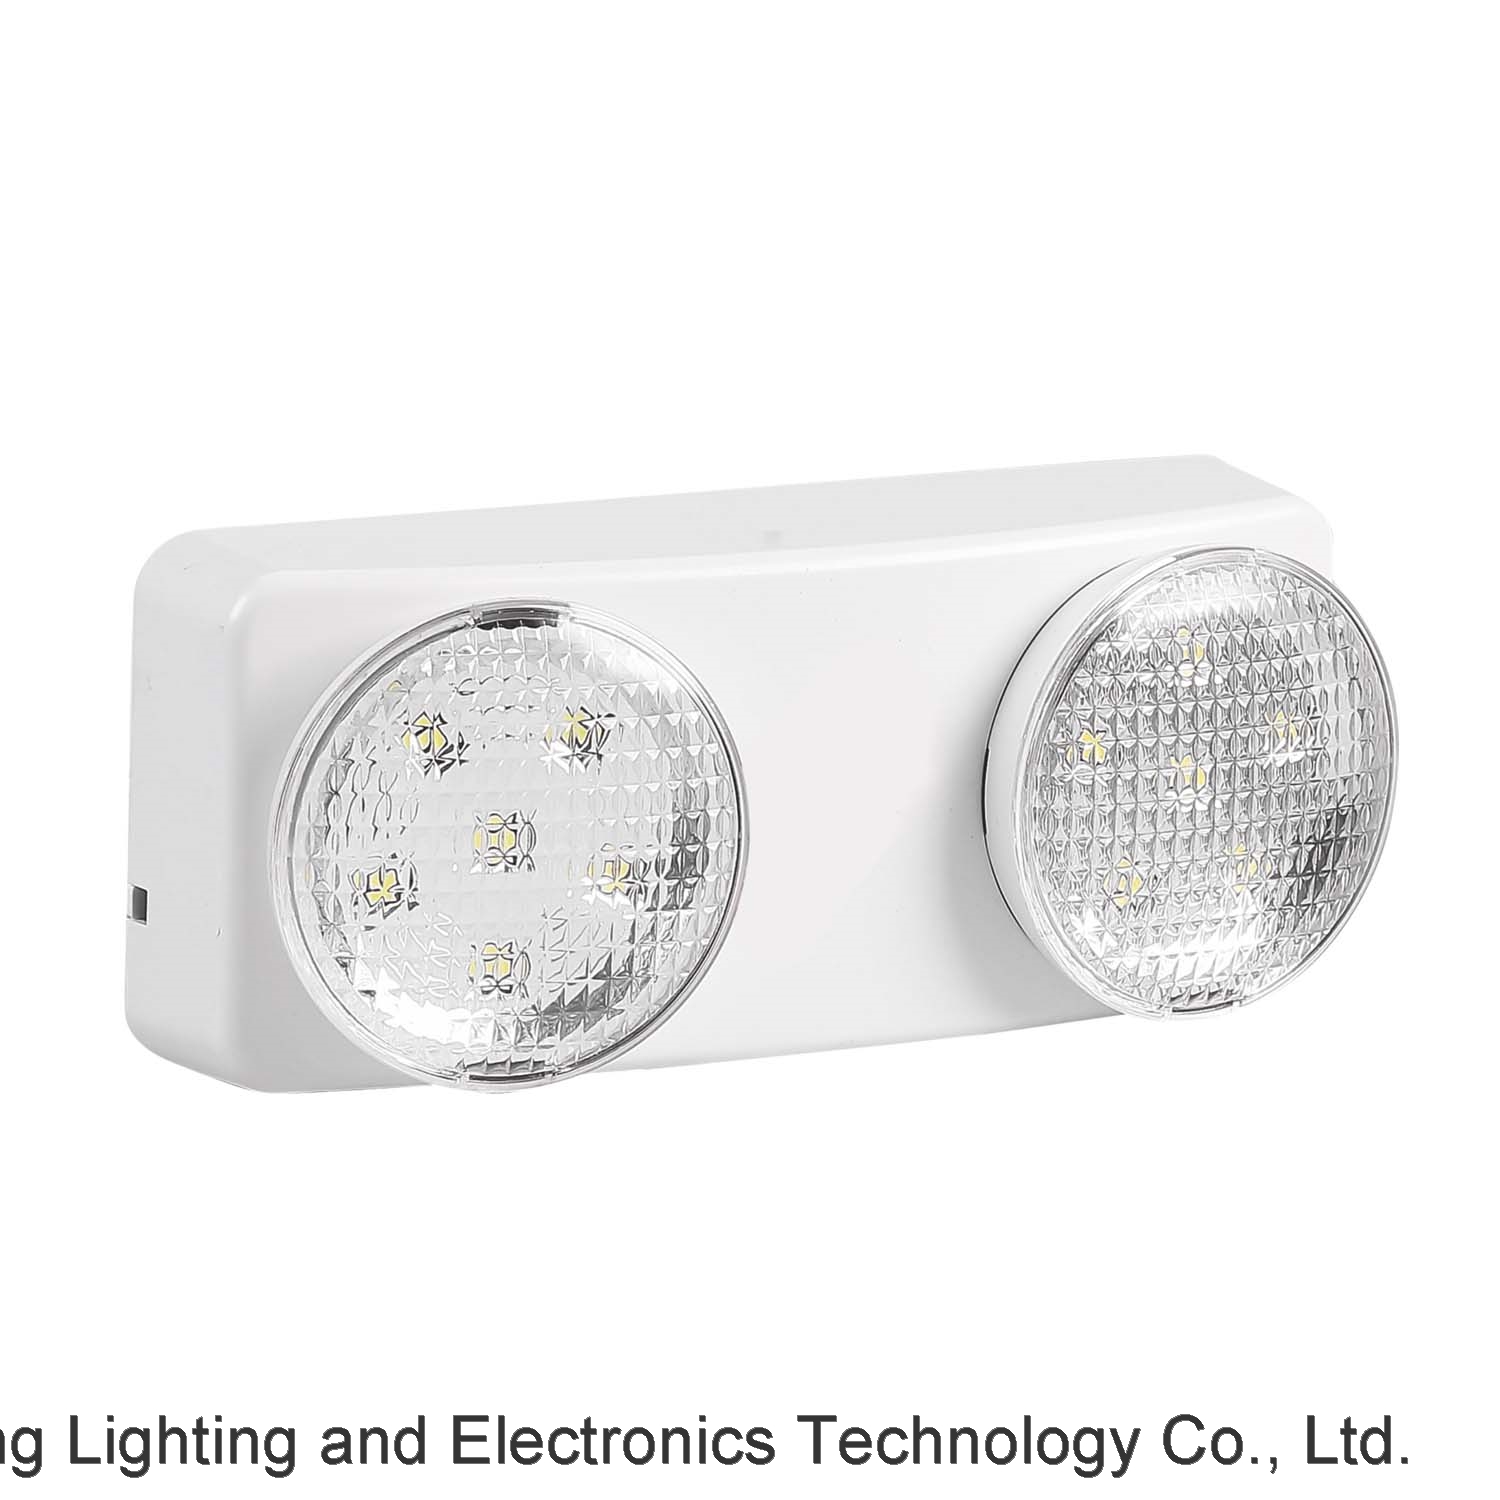 UL Listed LED Emergency Light CR-7019